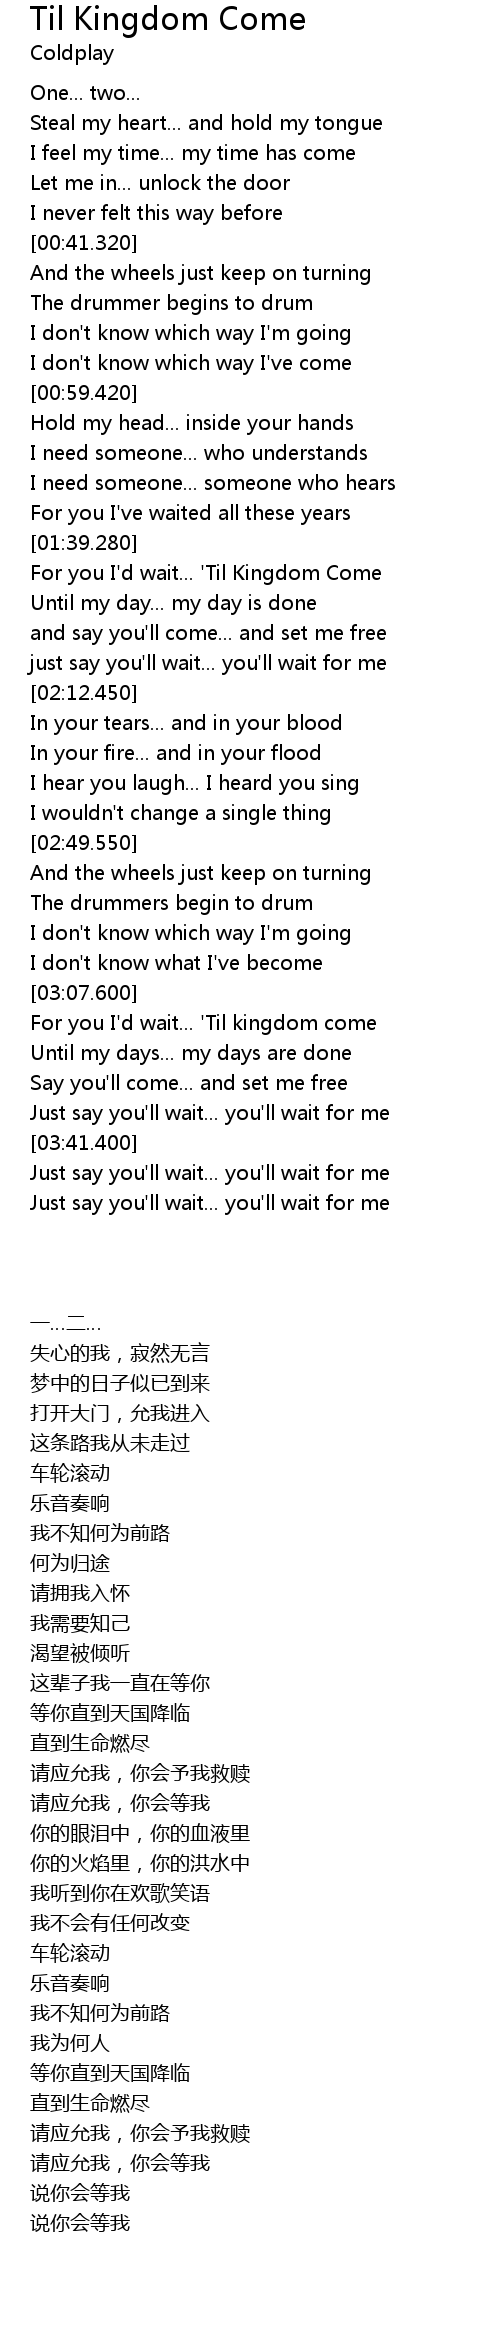 Kingdom come lyrics